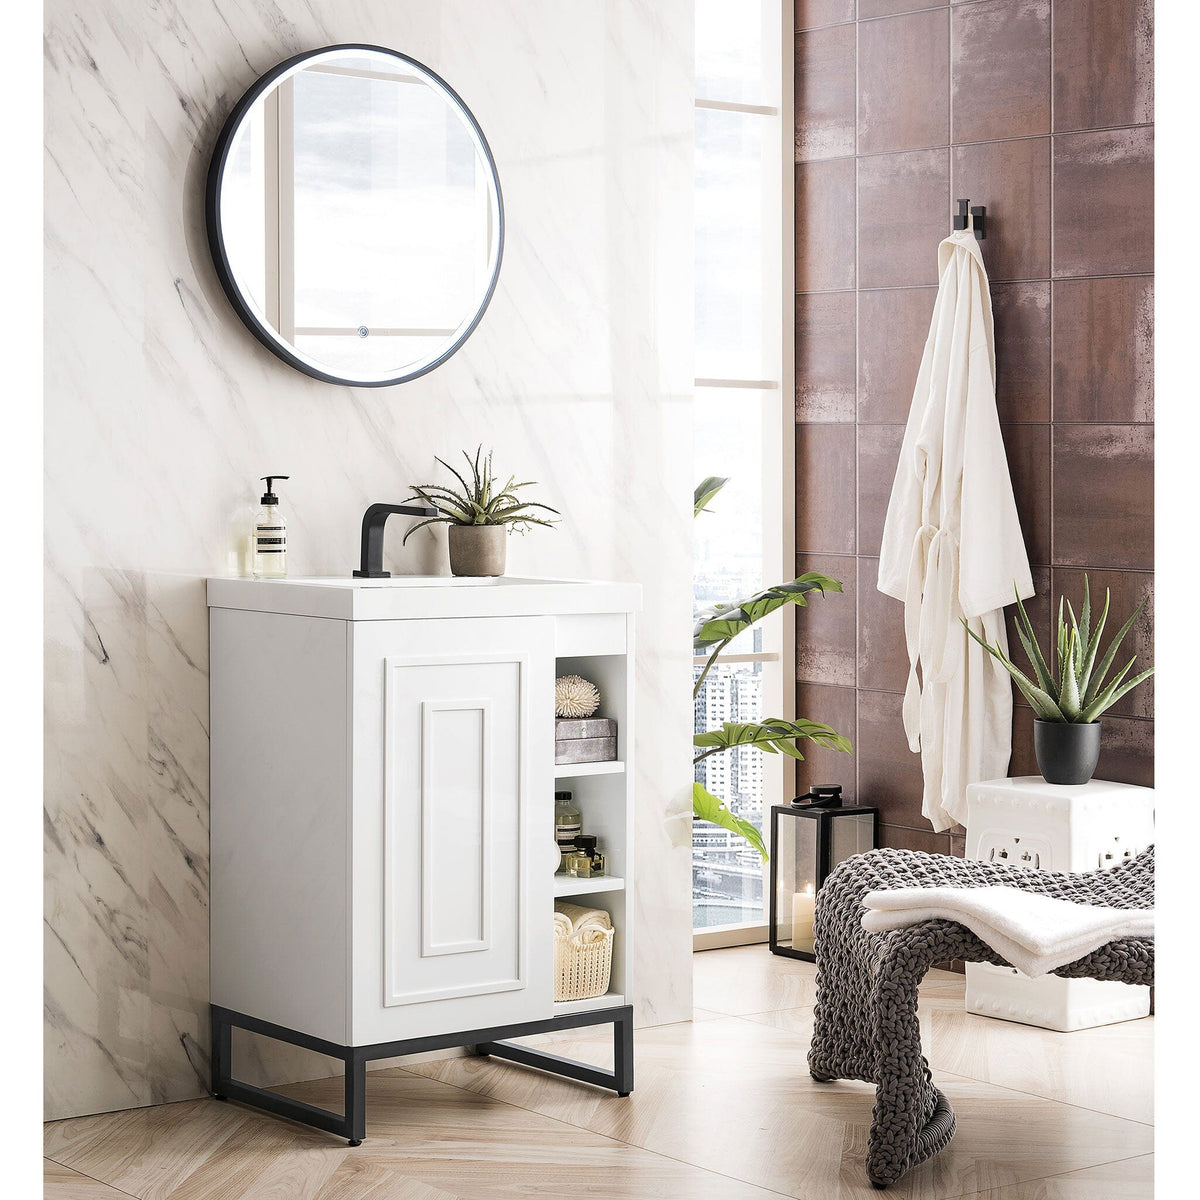 24" Alicante' Single Bathroom Vanity, Glossy White, Matte Black Base